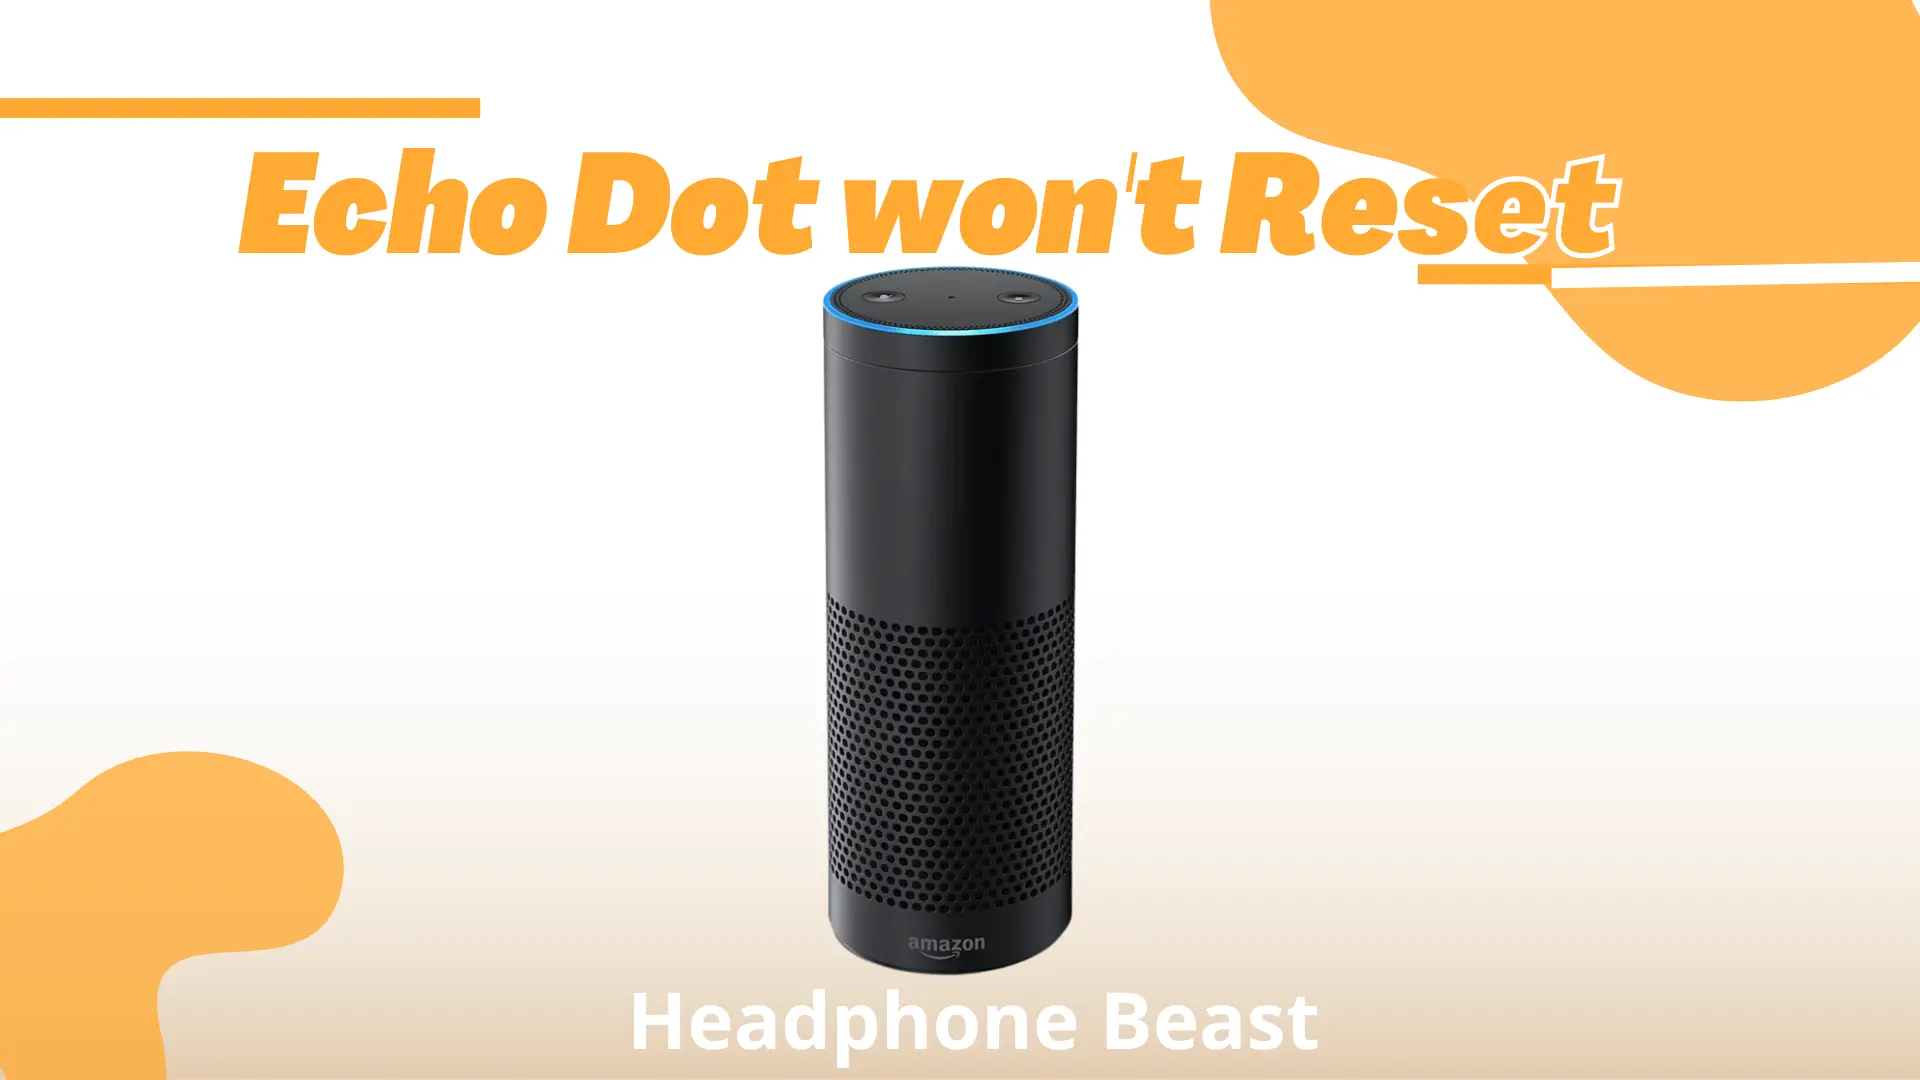 Echo Dot wont Reset